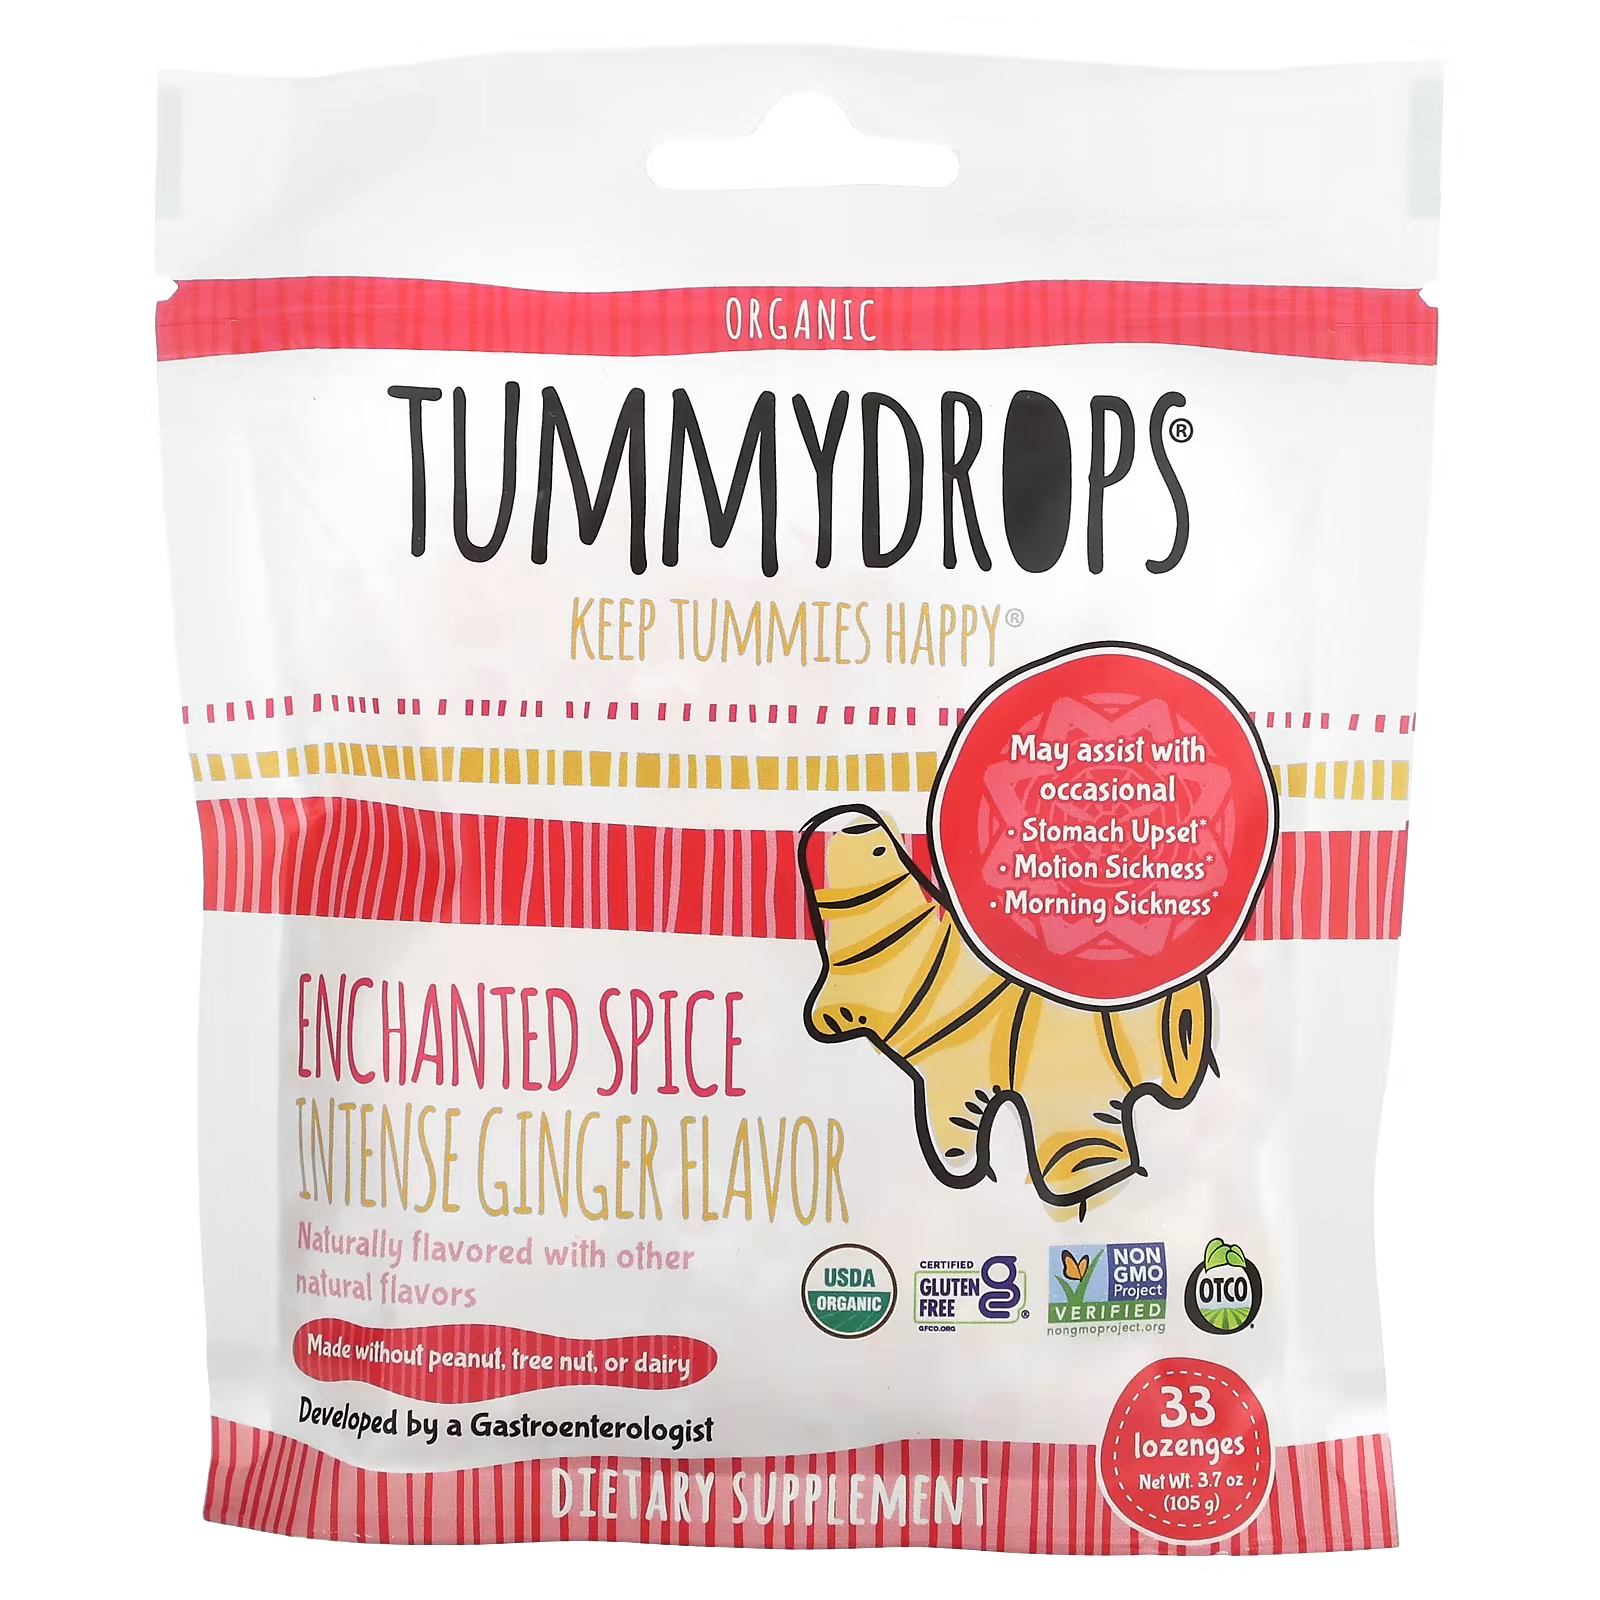 Пищевая добавка Tummydrops Organic Enchanted Spice Intense Ginger, 33 пастилки